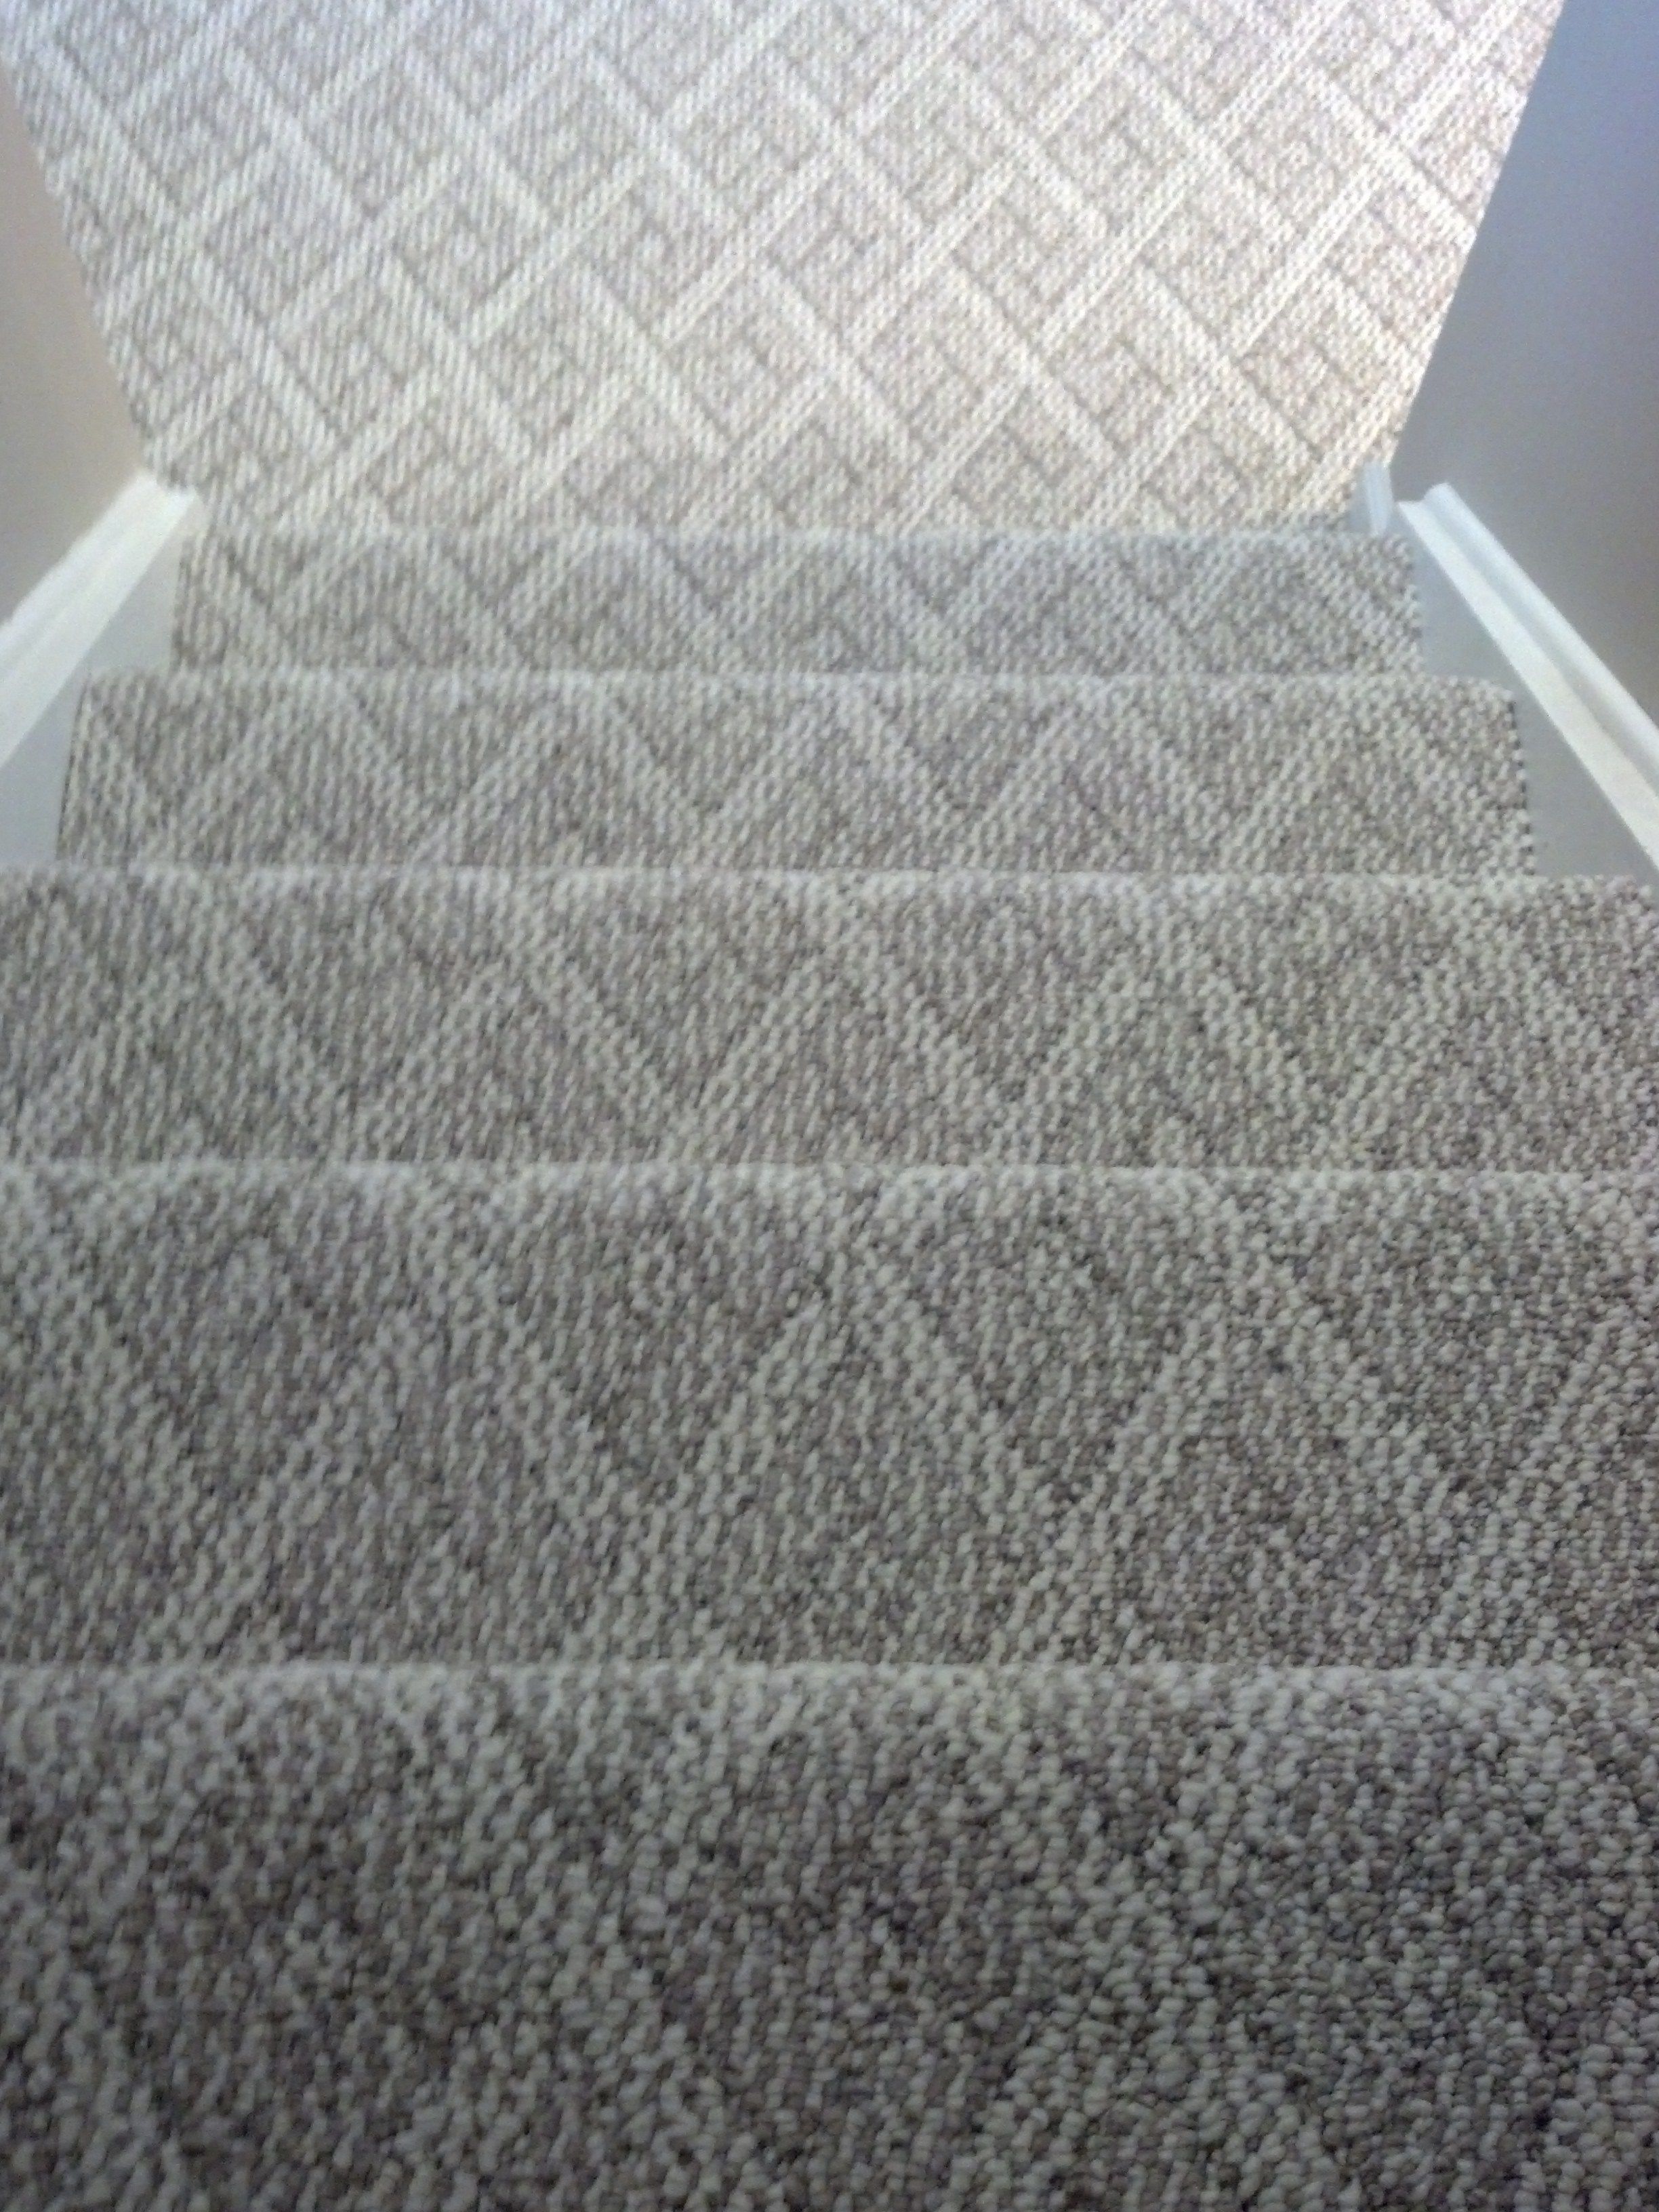 berber carpeting berber carpet cincinnati, ohio installed on steps and basement family room.  note.....notice EOAUCHT